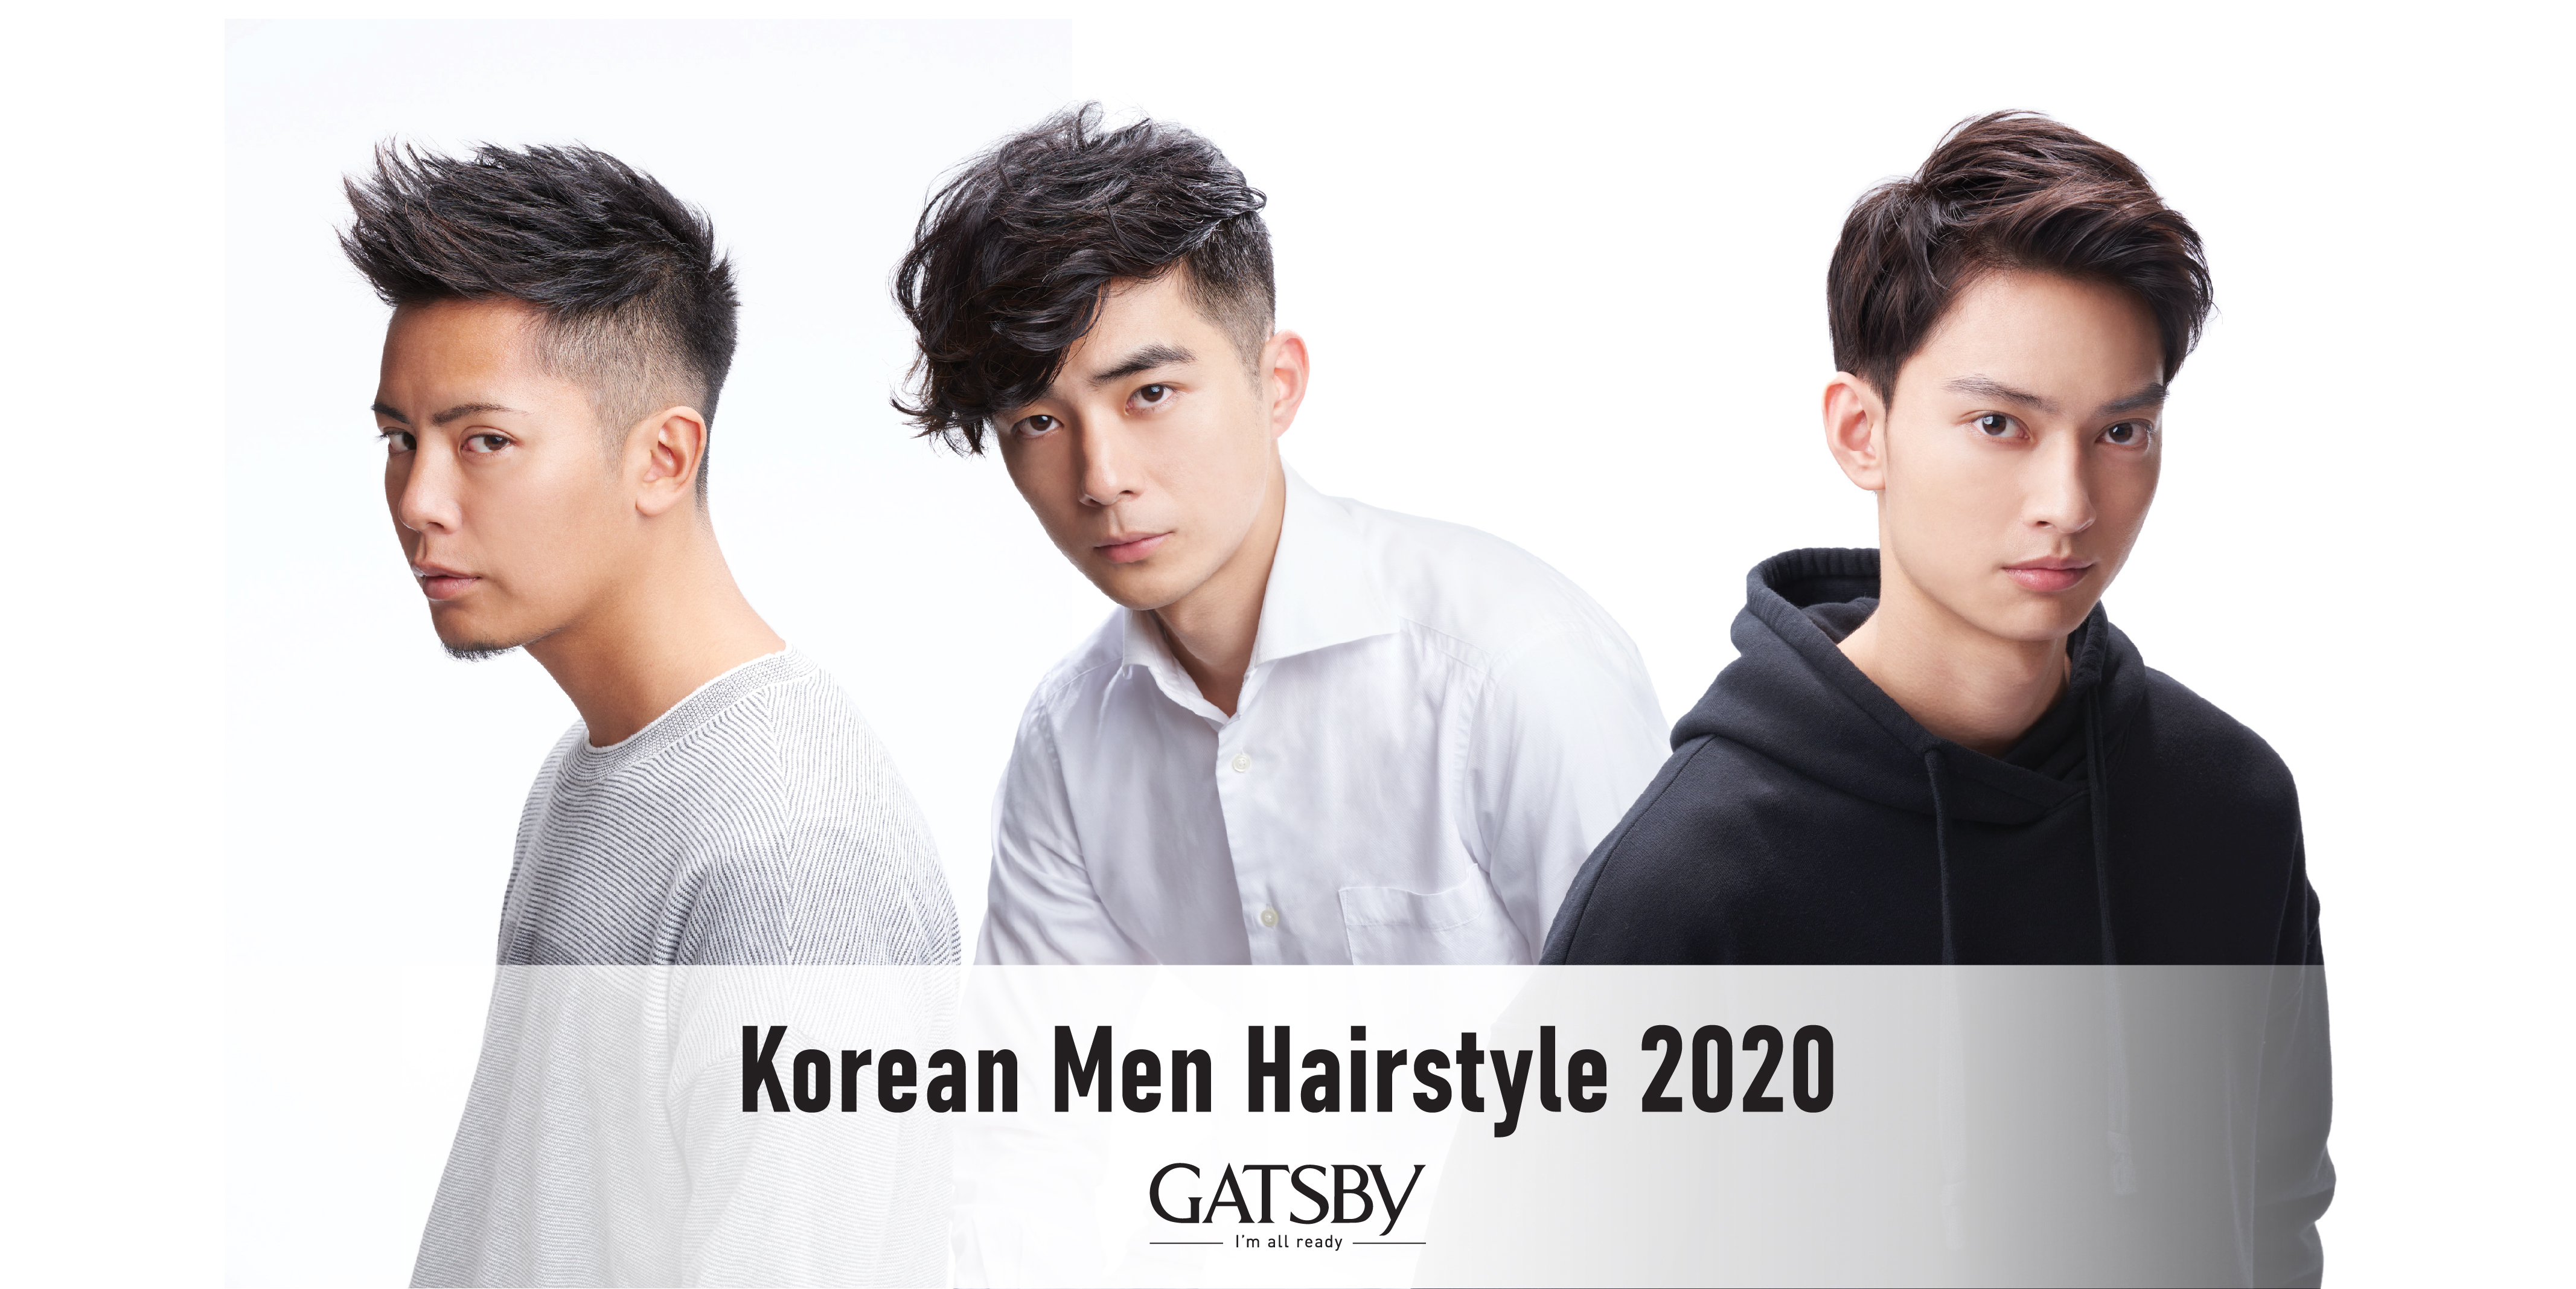 GATSBY | Korean Men Hairstyle 2020